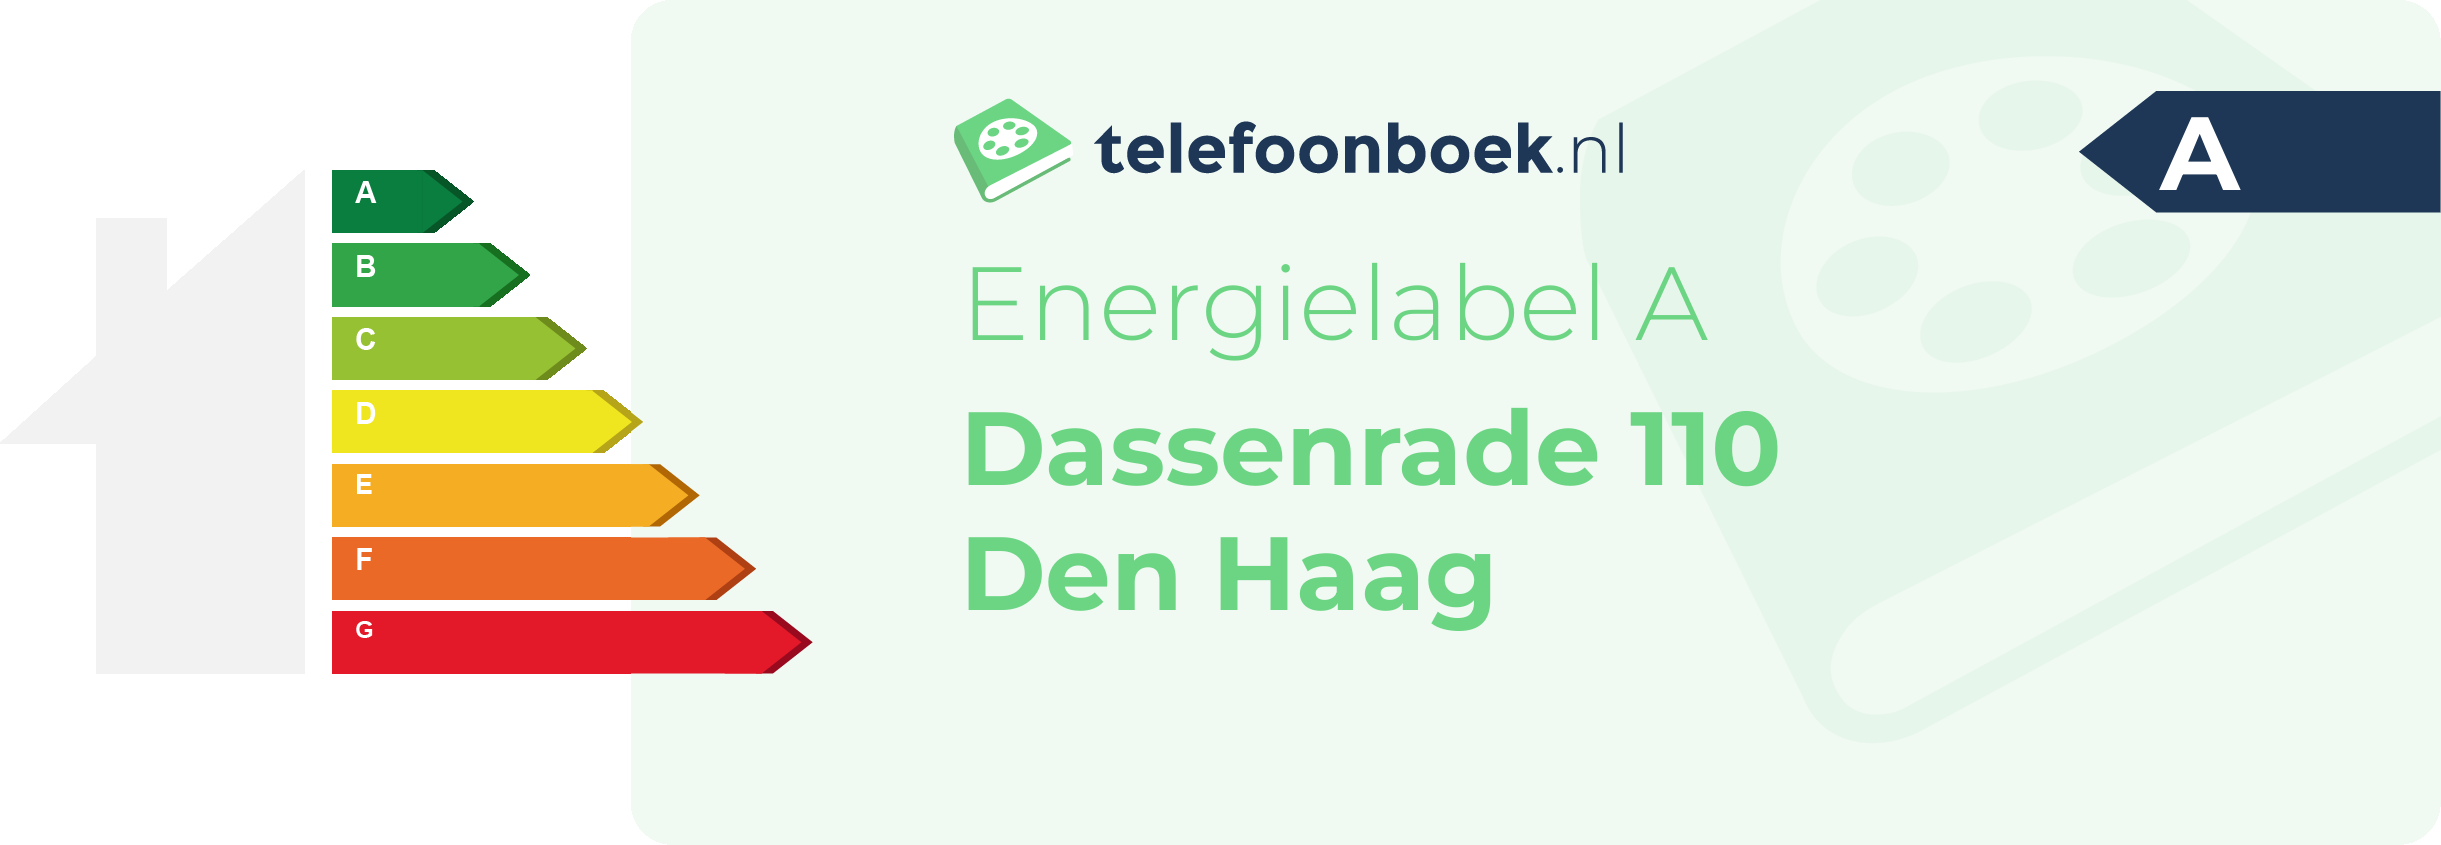 Energielabel Dassenrade 110 Den Haag